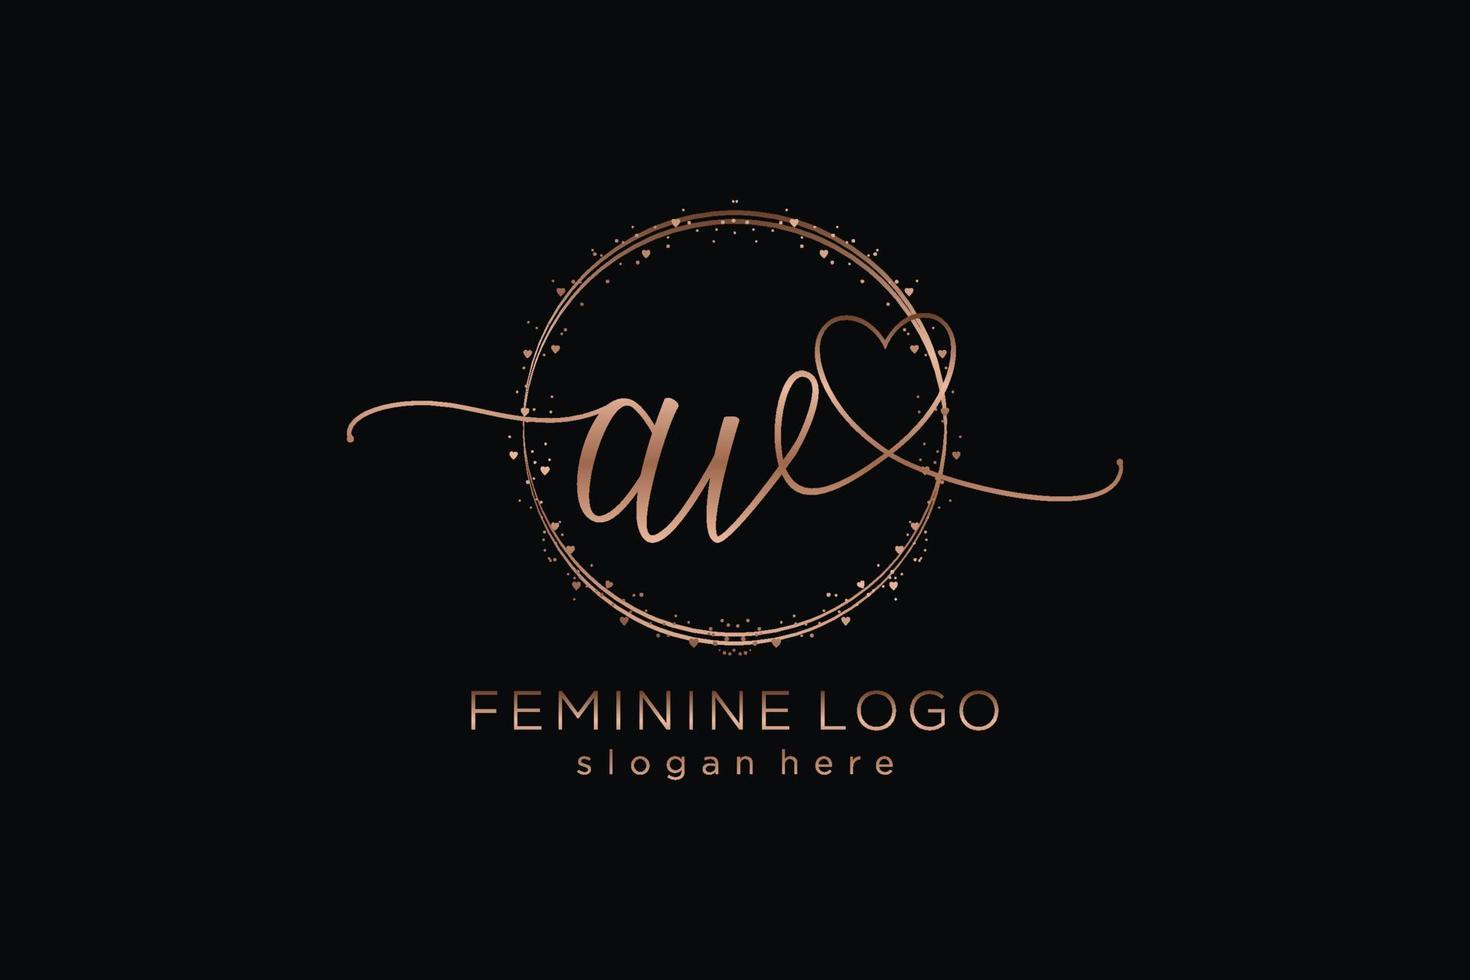 logotipo inicial de escritura av con plantilla de círculo logotipo vectorial de boda inicial, moda, floral y botánica con plantilla creativa. vector